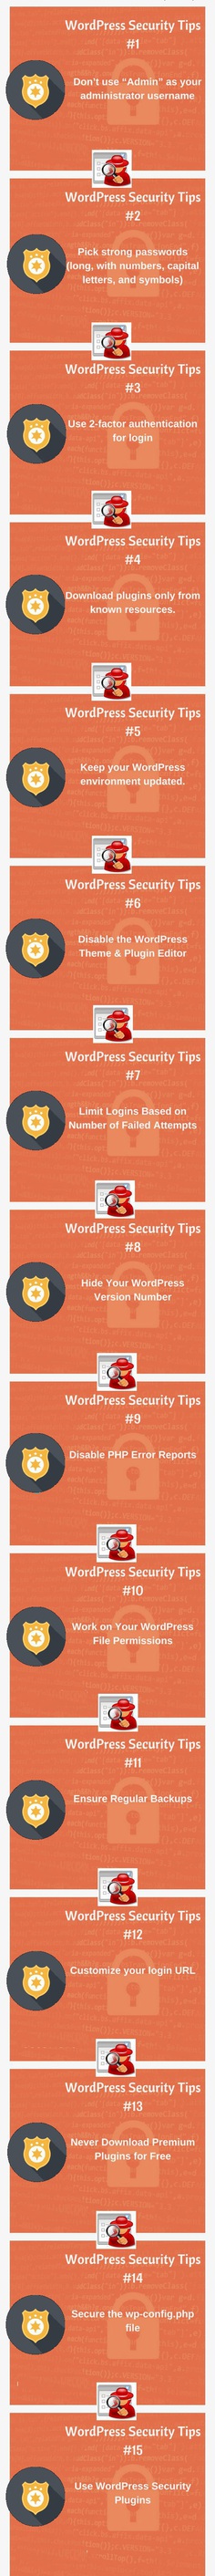 Top 15 WordPress Website Security Tips - Step by Step July 2018